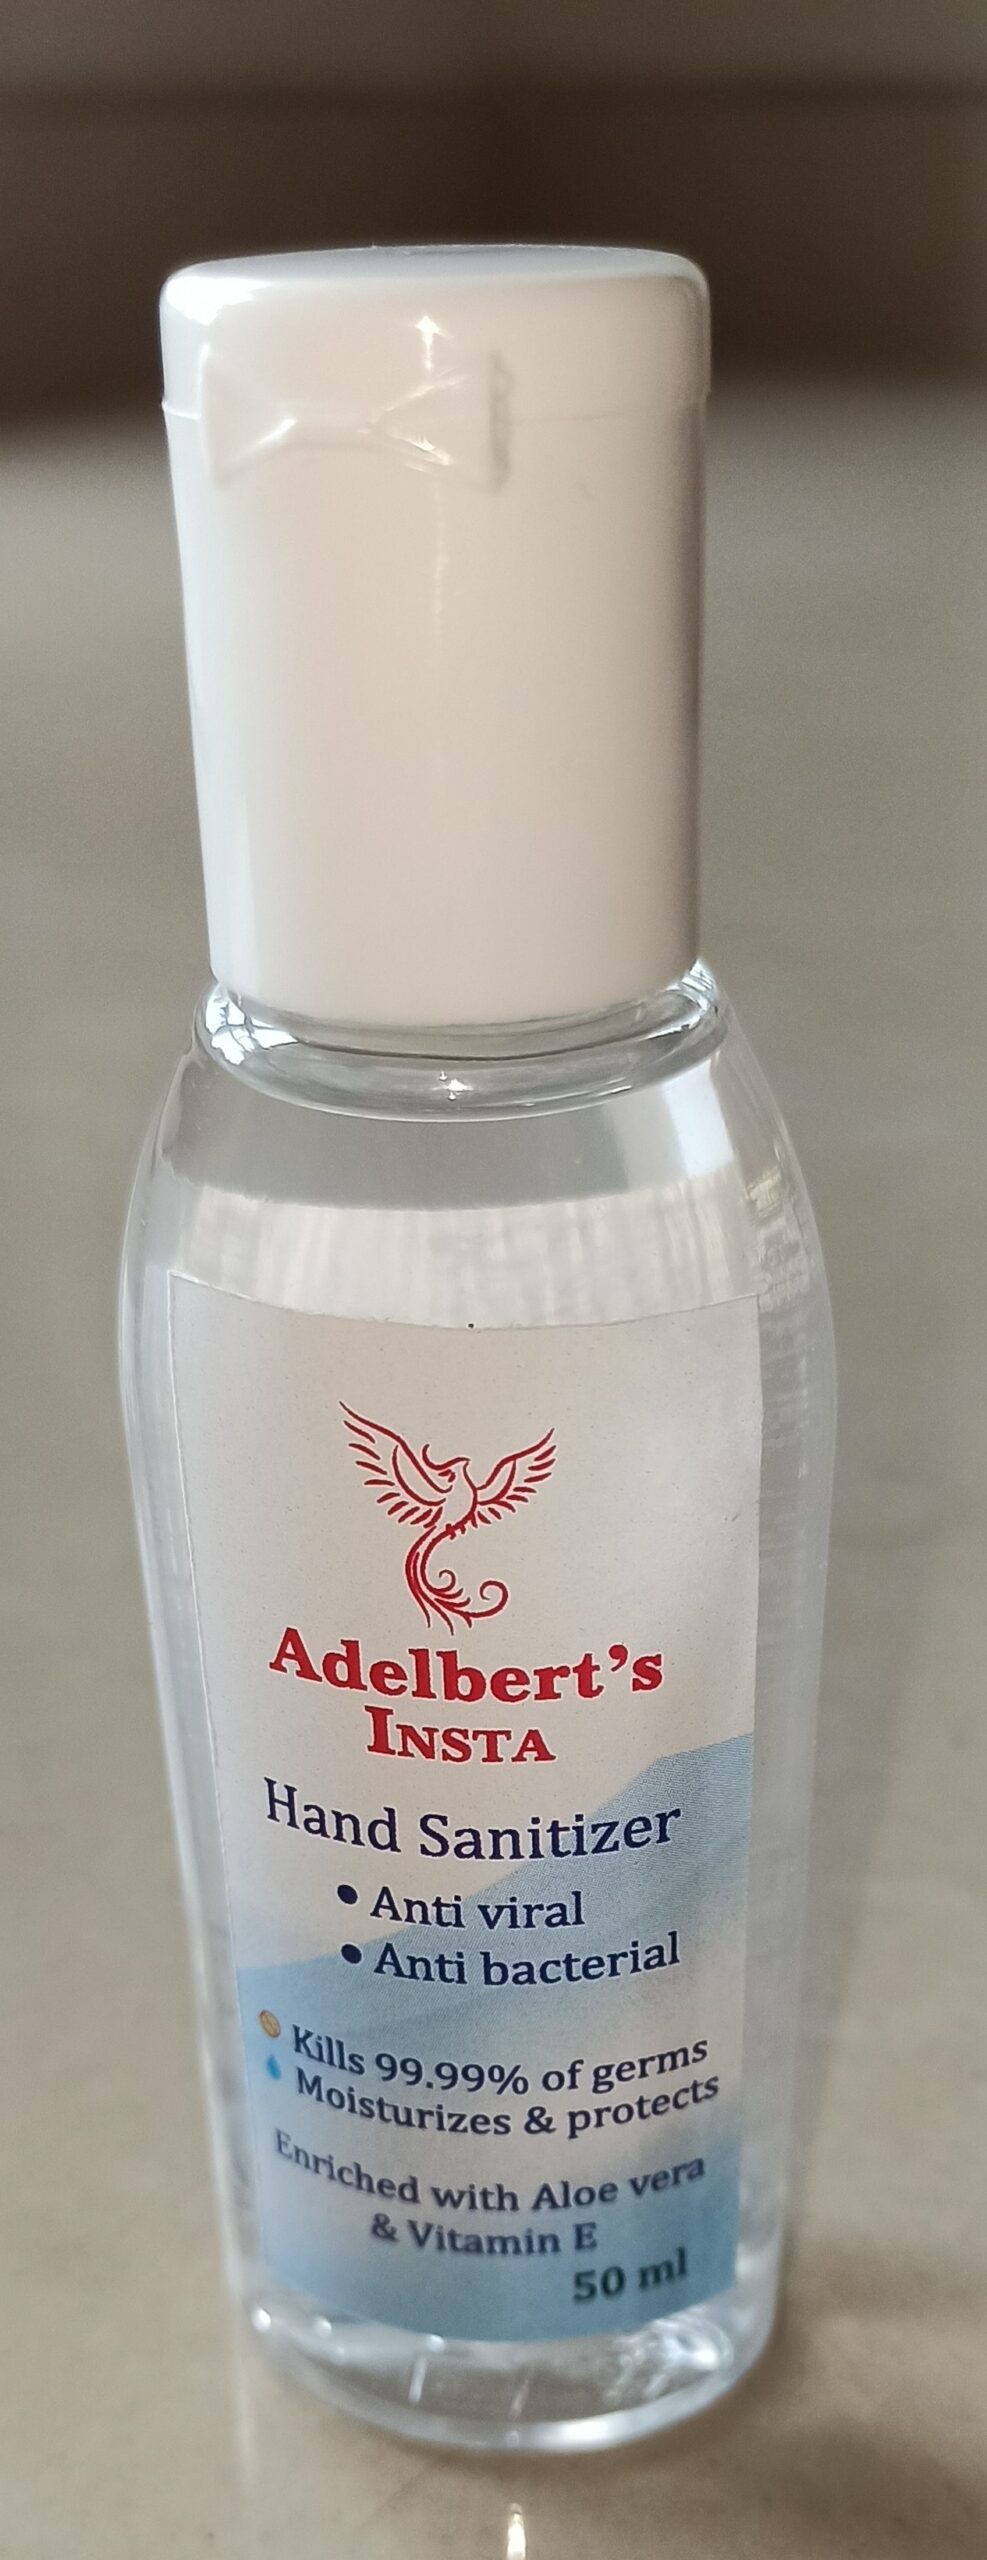 Adelberts Insta Hand Sanitizer front side